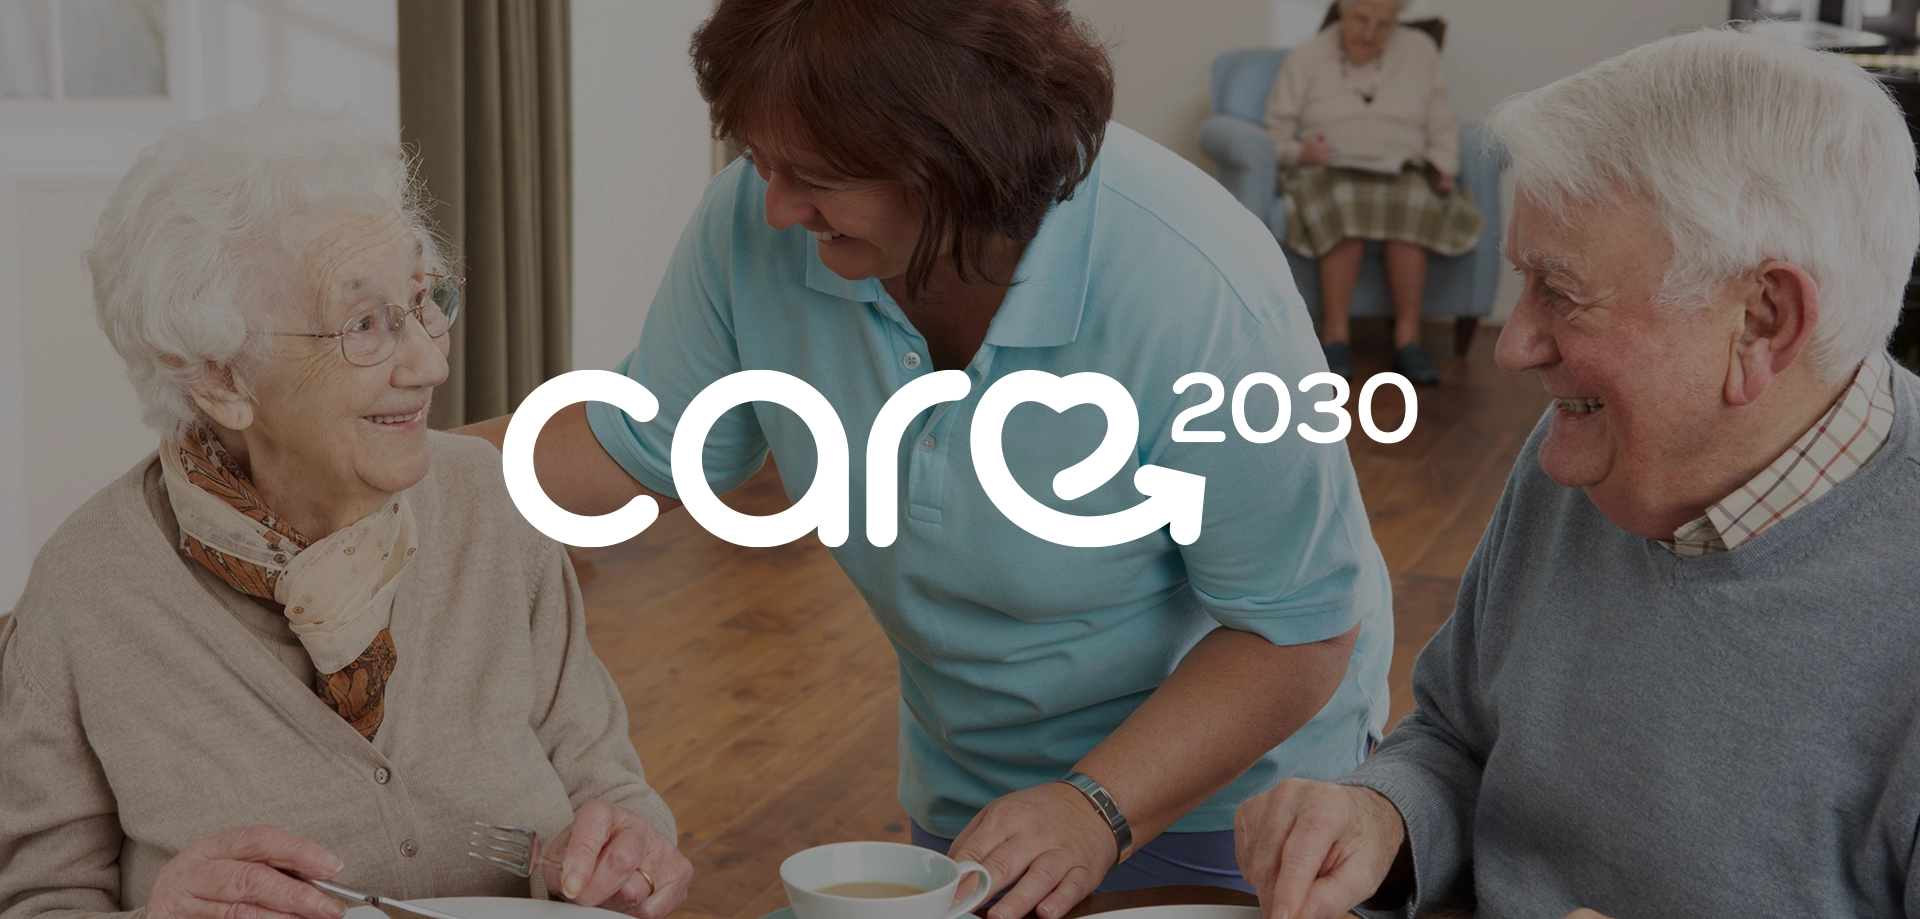 Care 2030 branding importance